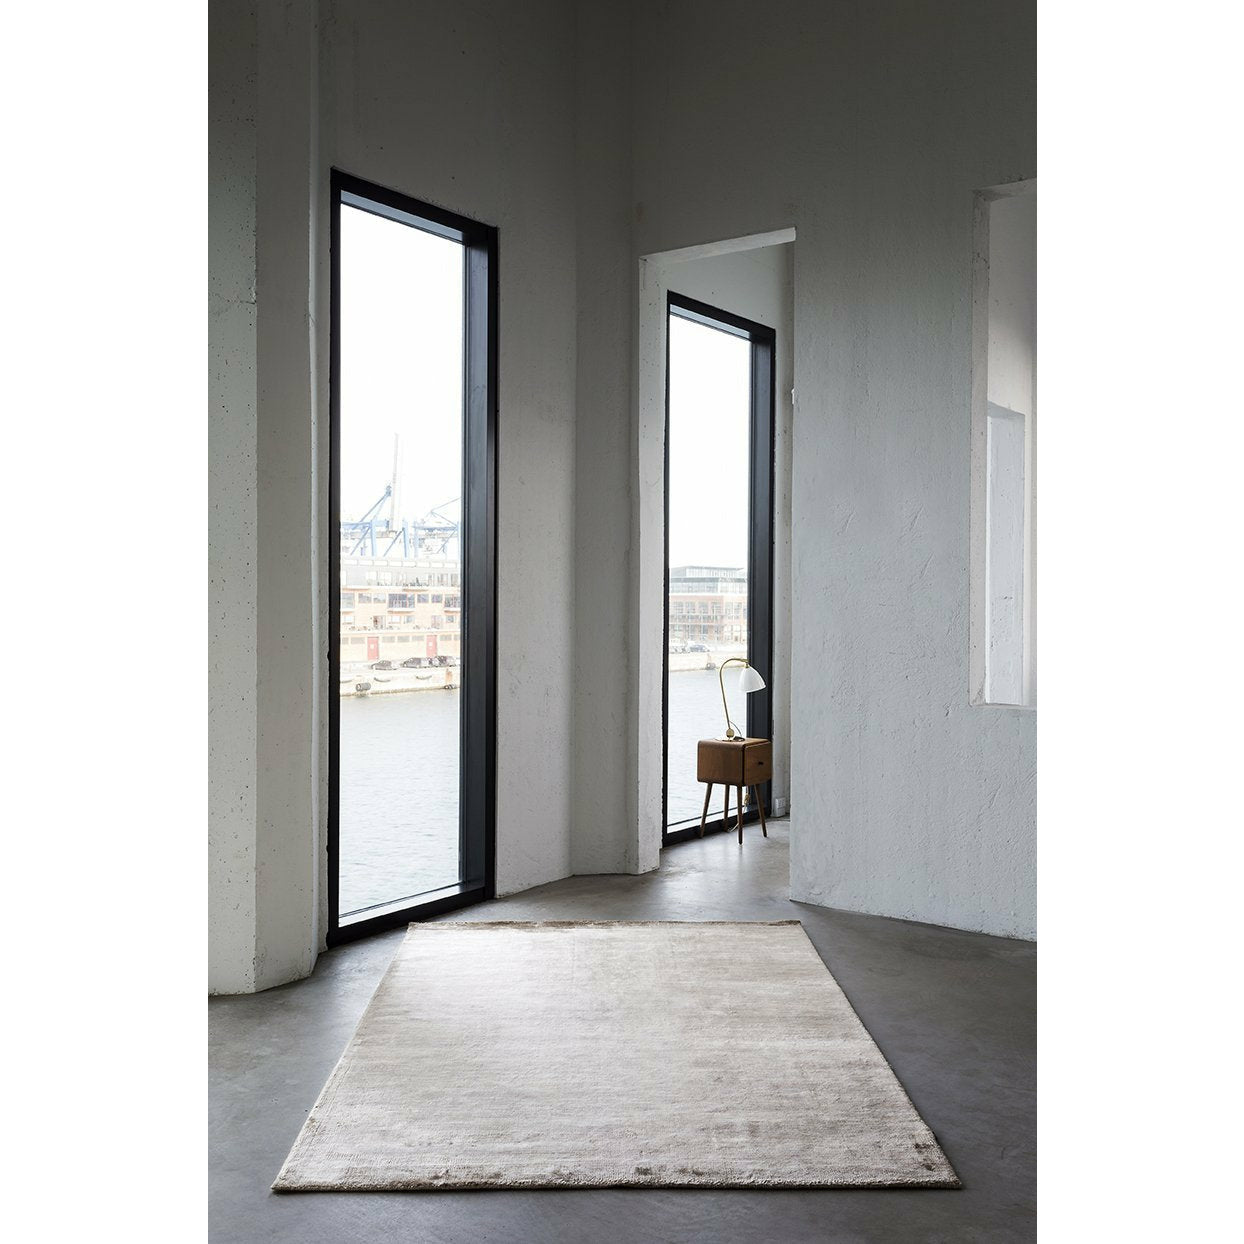 Massimo Bambu -mattan ljusbrun, 200x300 cm